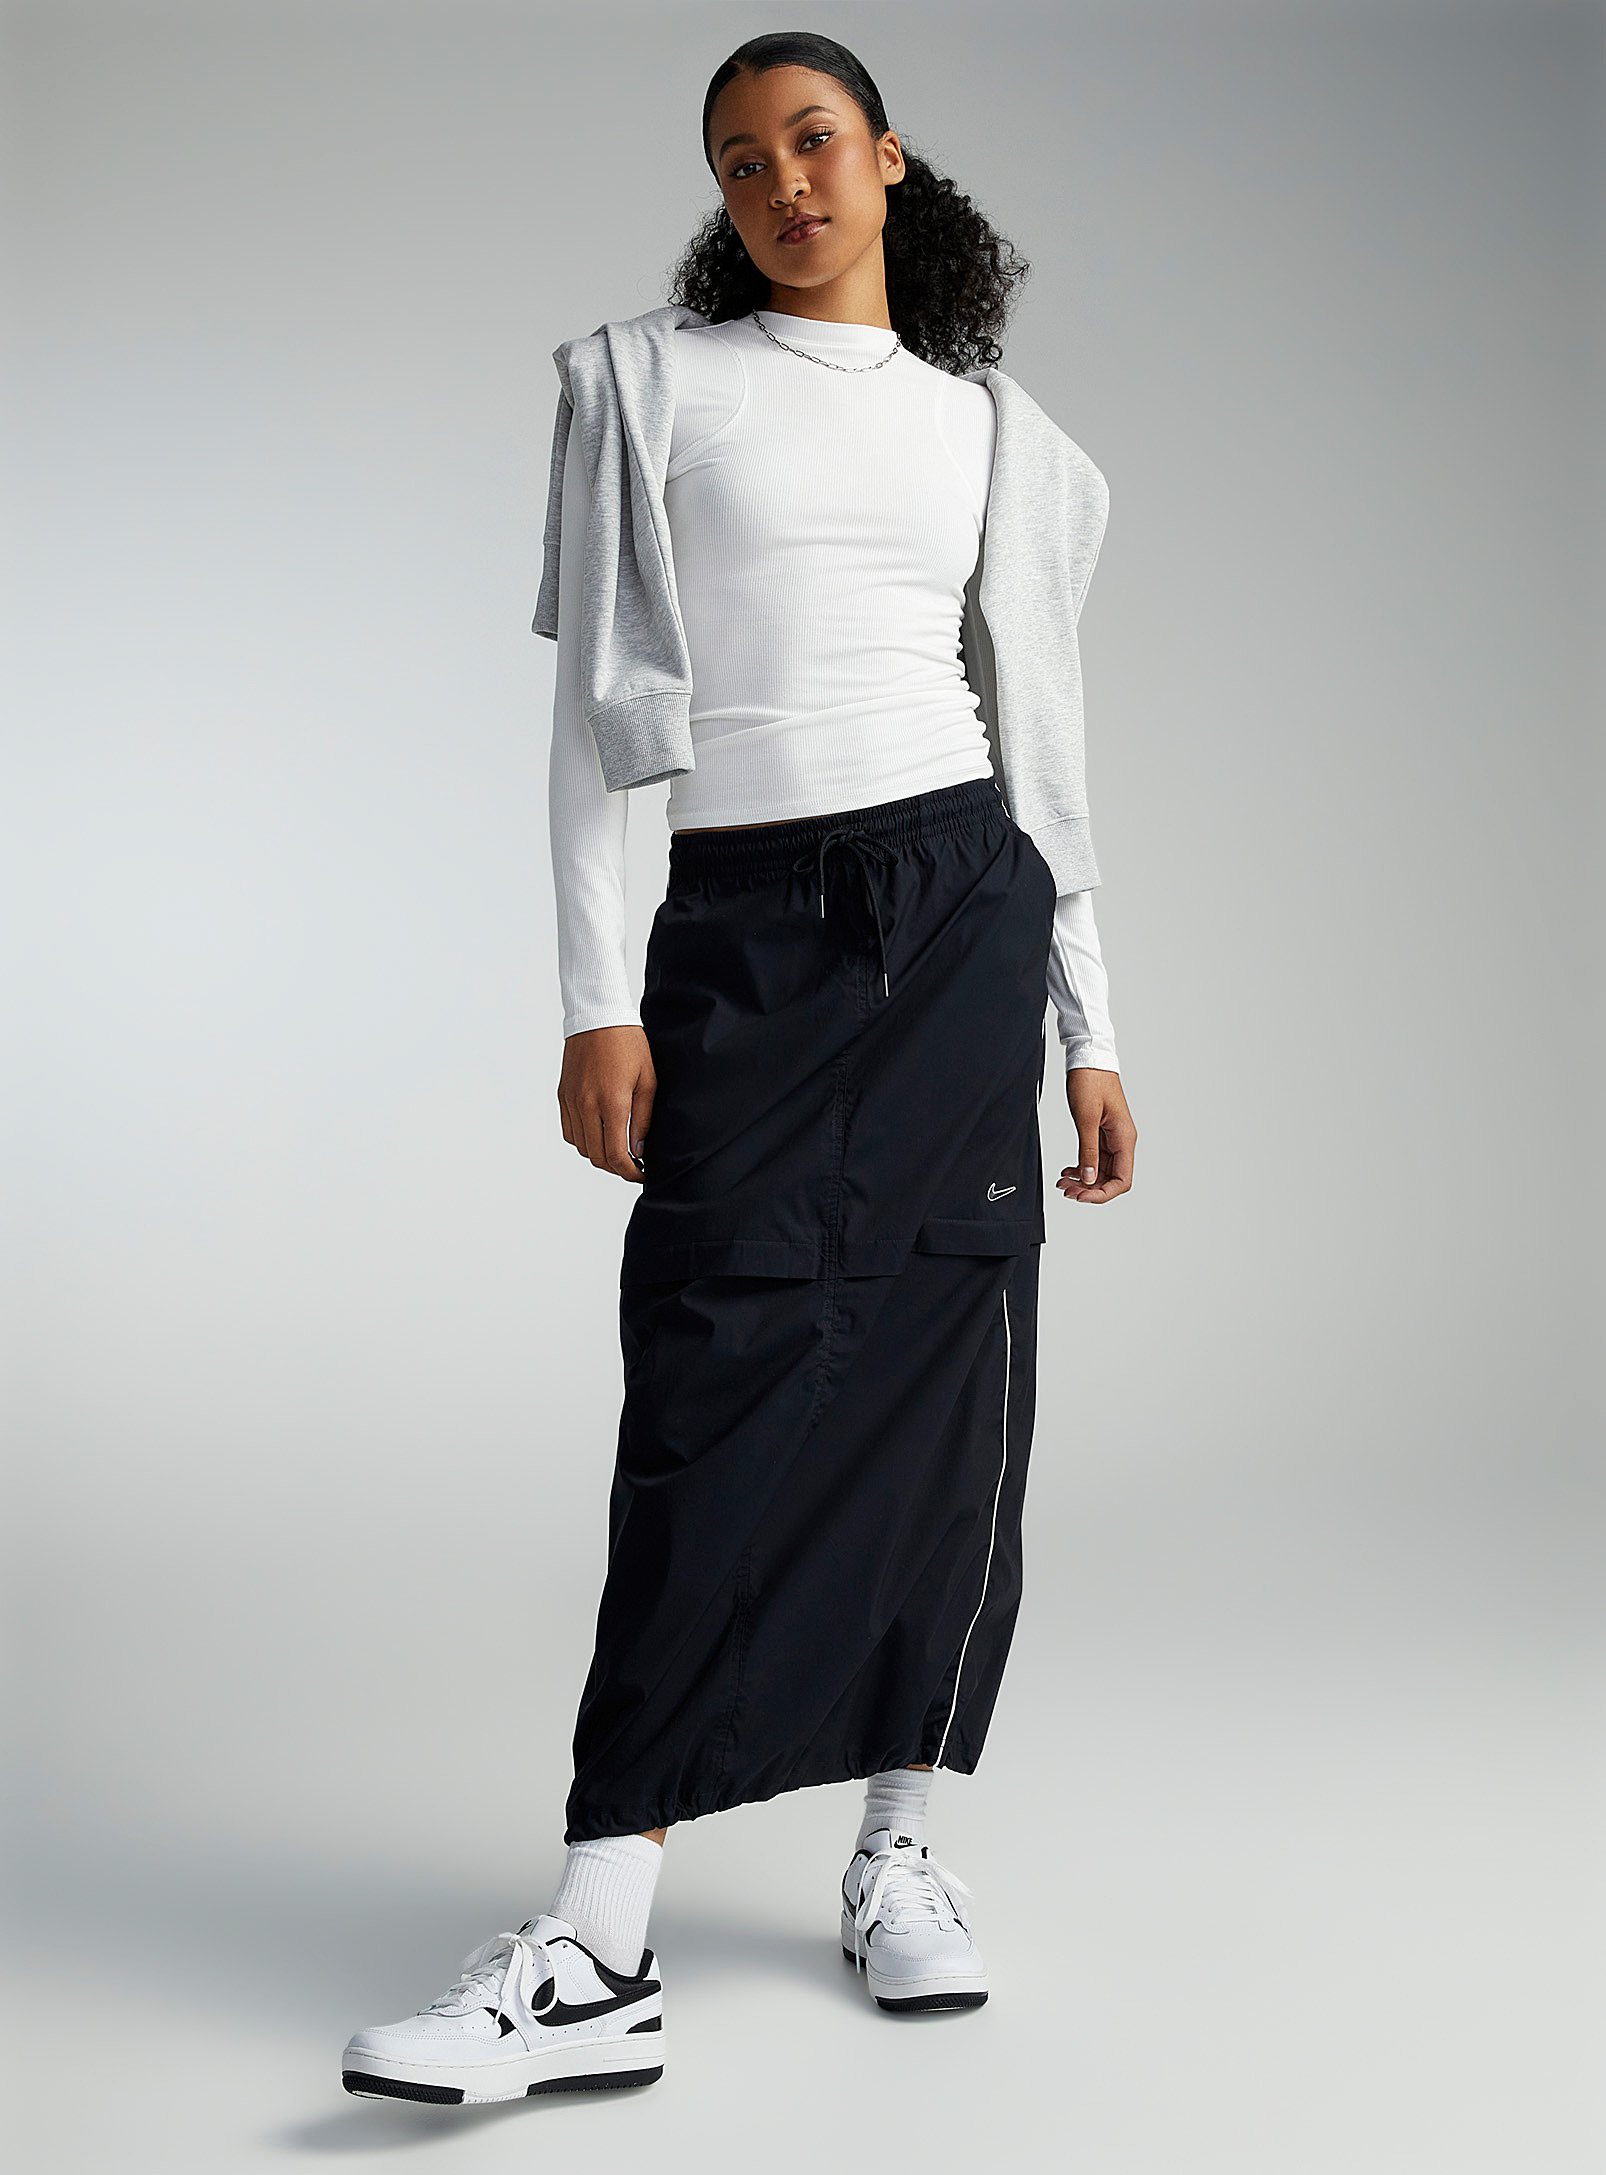 Nike - Women's White stripes parachute skirt